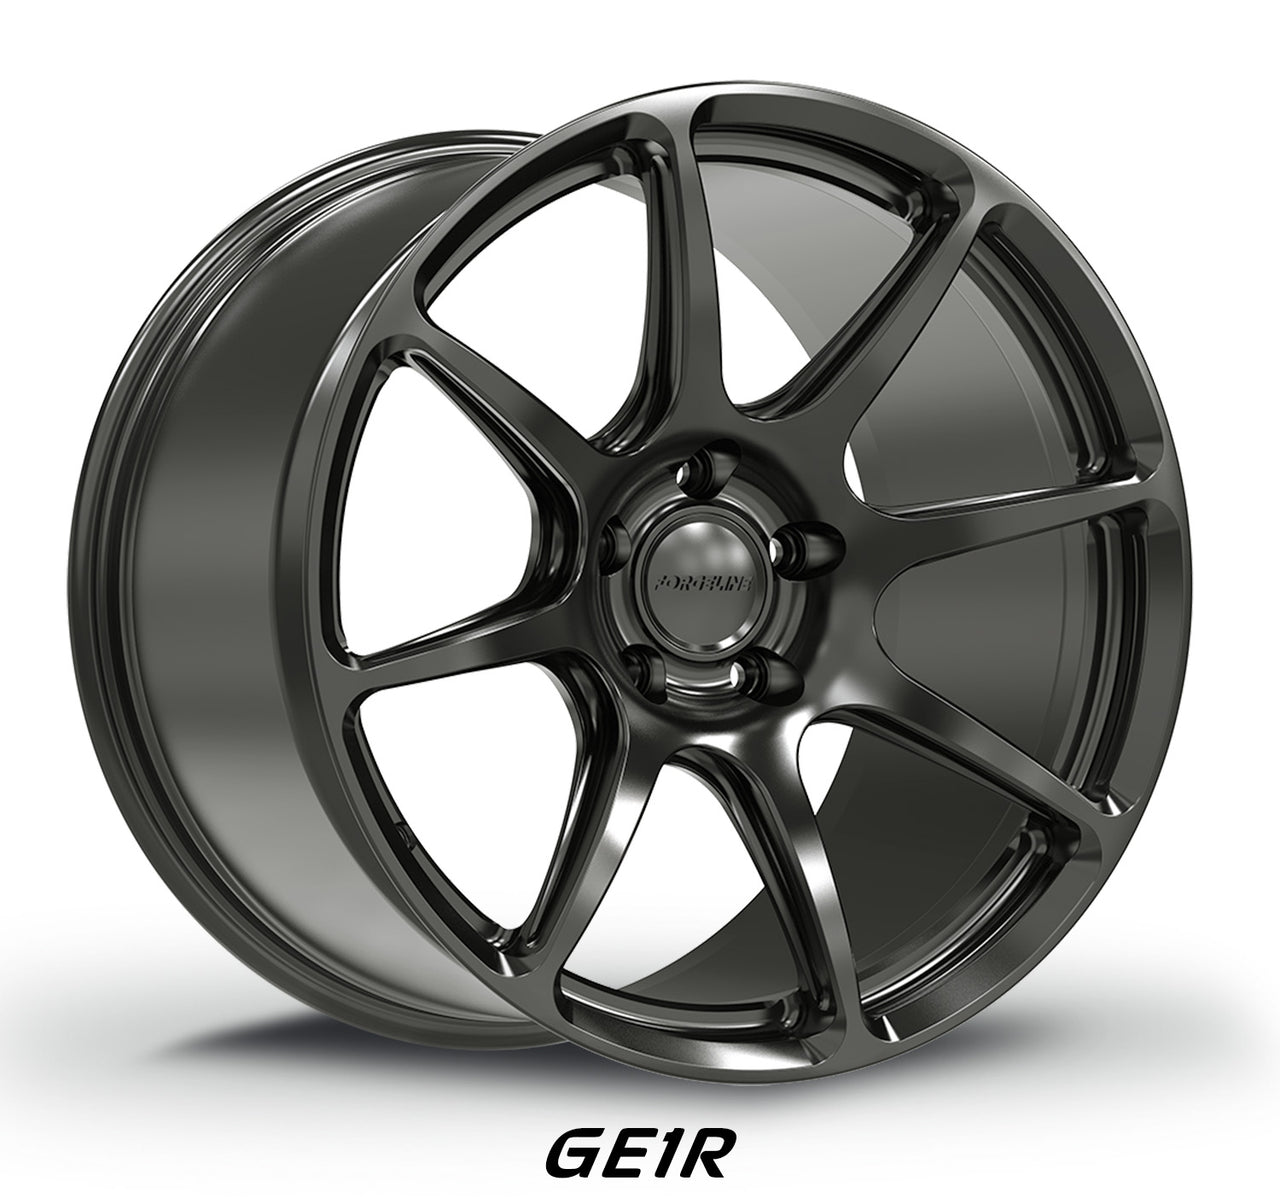 Forgeline GE1R 5-lug monoblock forged racing wheel in Satin Black for Porsche Cayman GT4